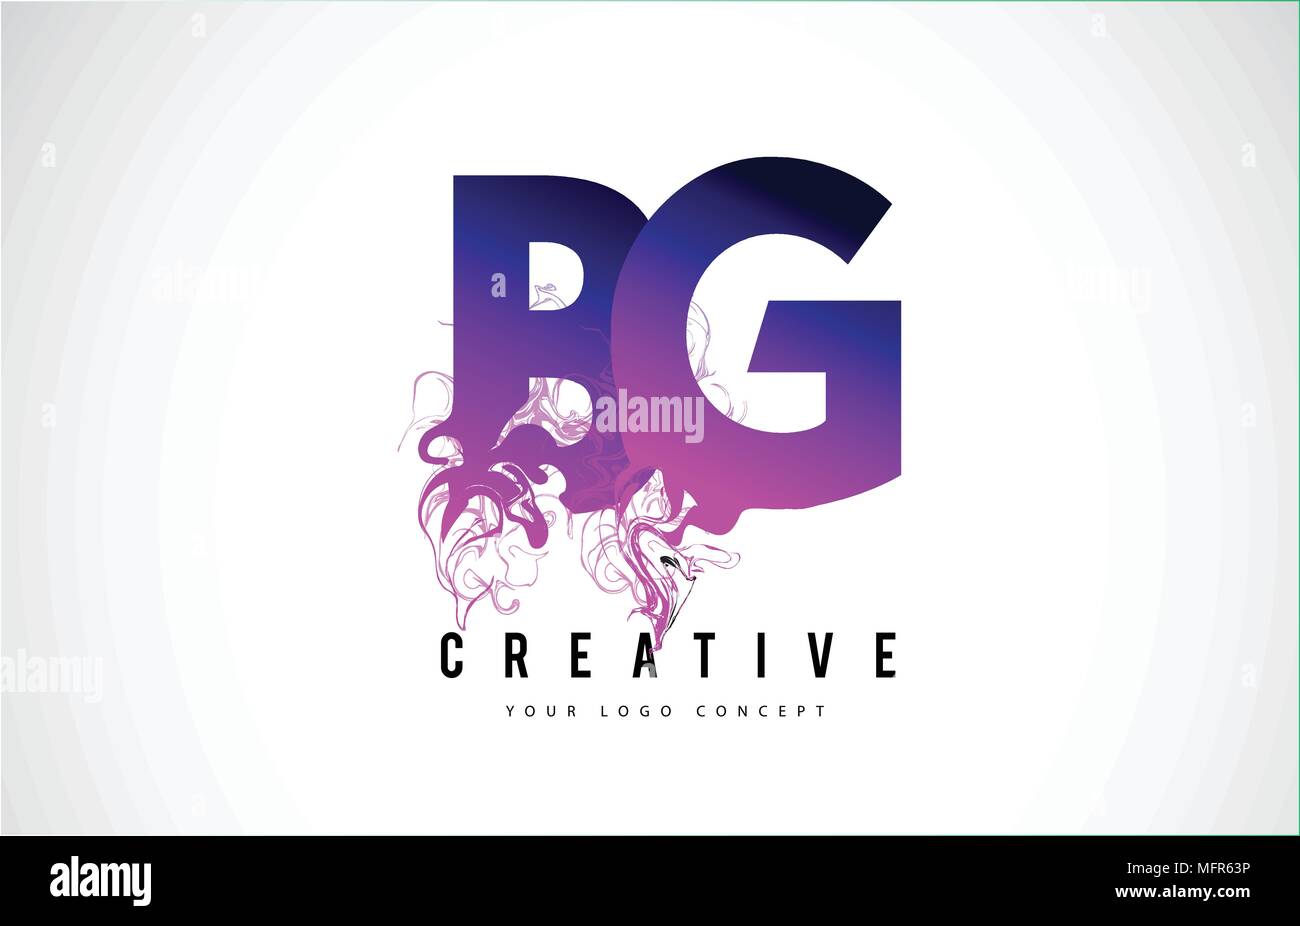 BG B G Purple Letter Logo Design with Creative Liquid Effect Flowing Vector Illustration. Stock Vector